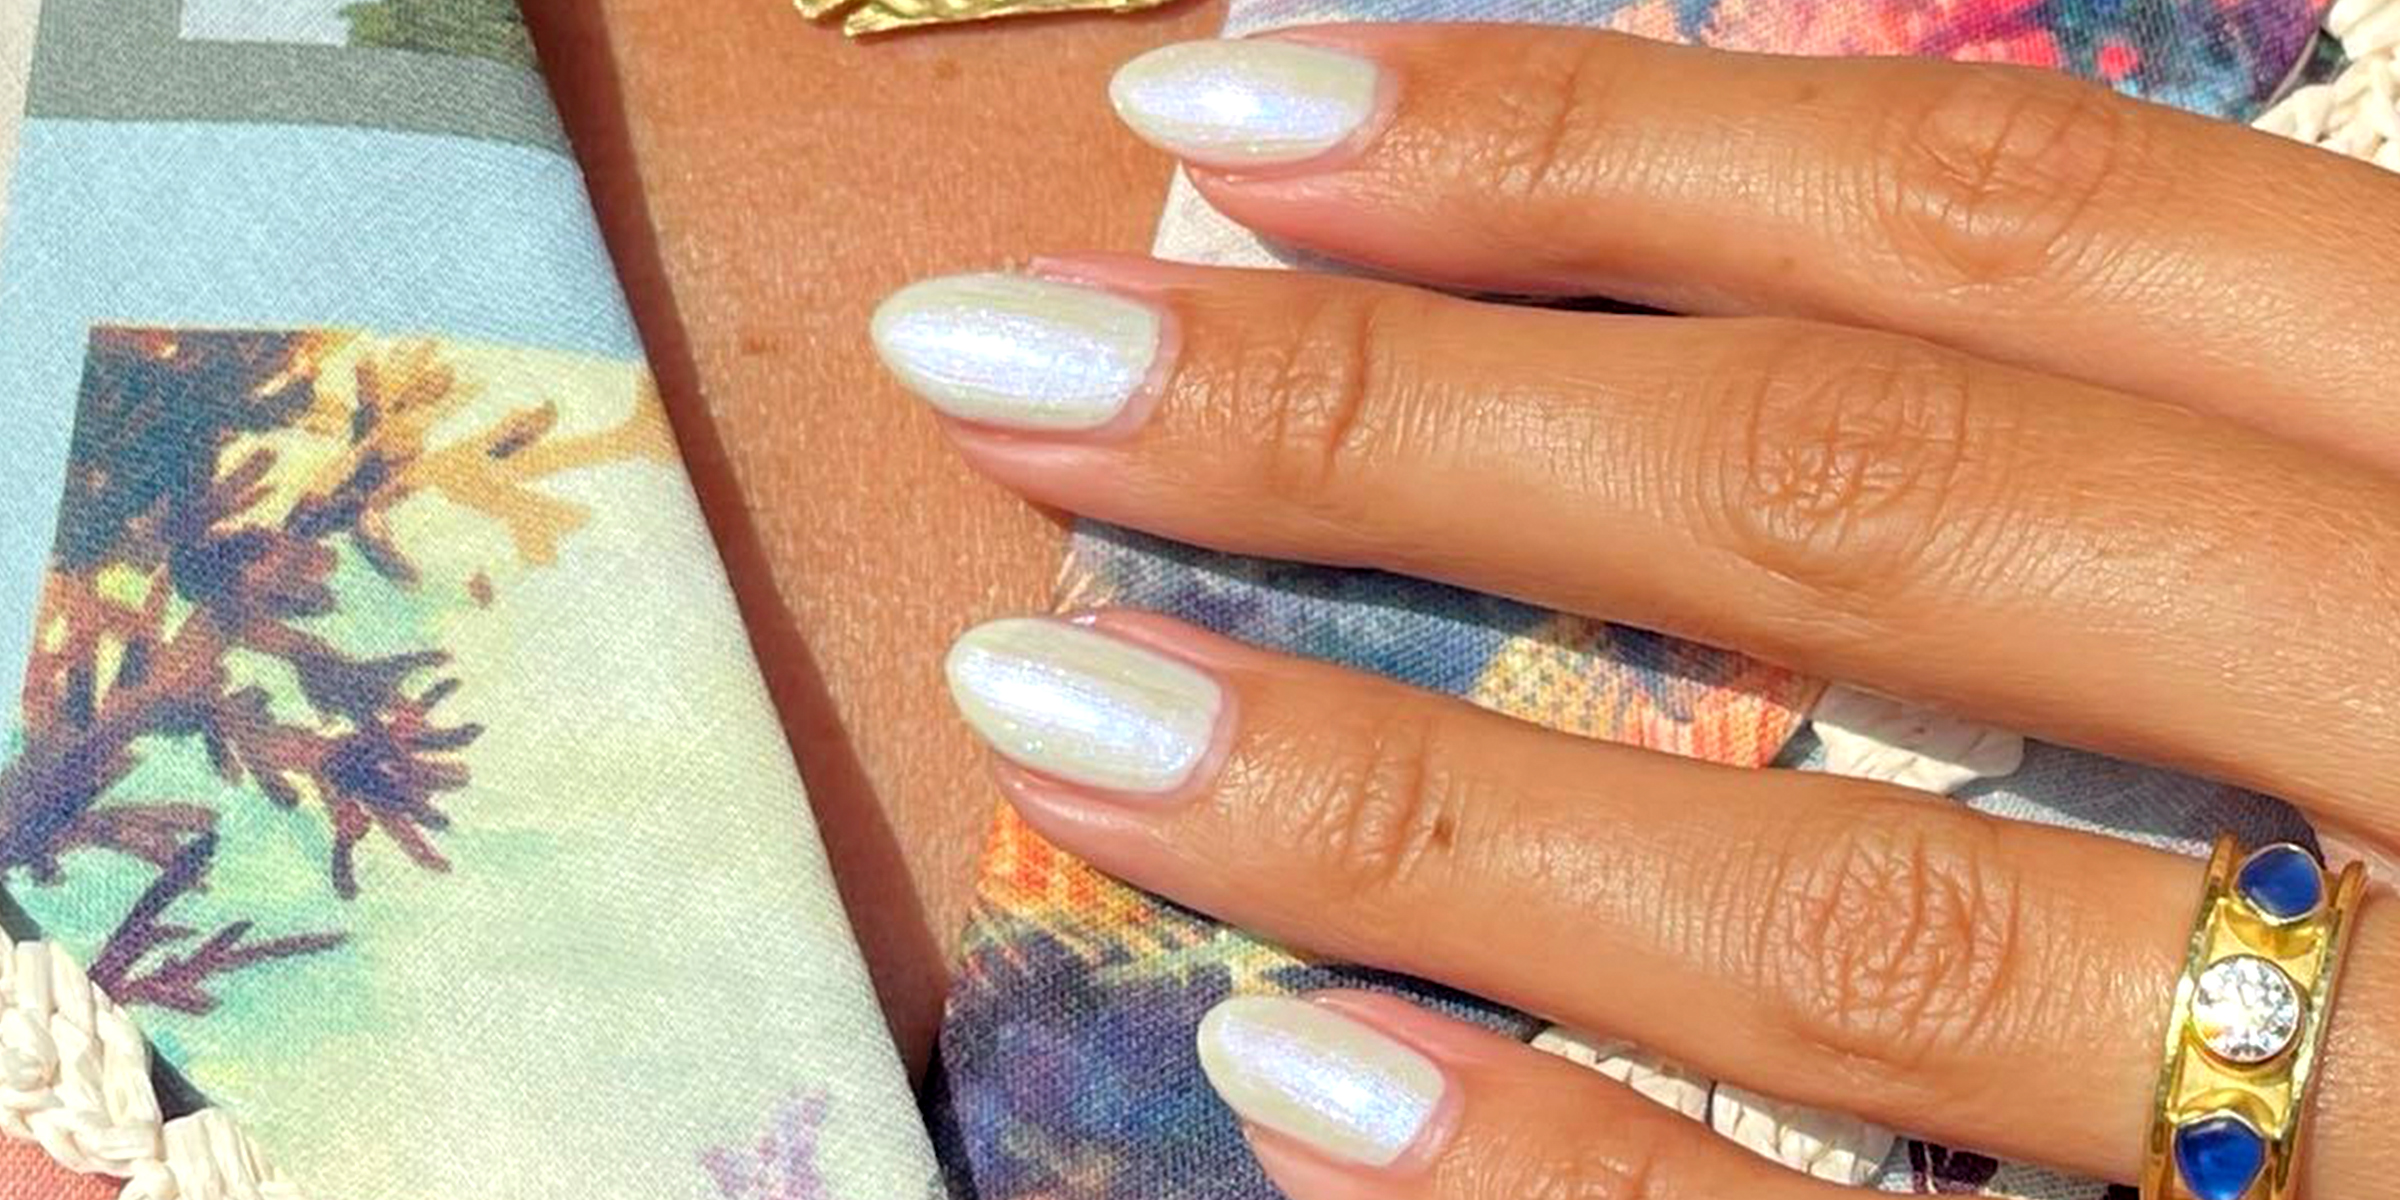 Pearl nails | Source: Instagram/essie